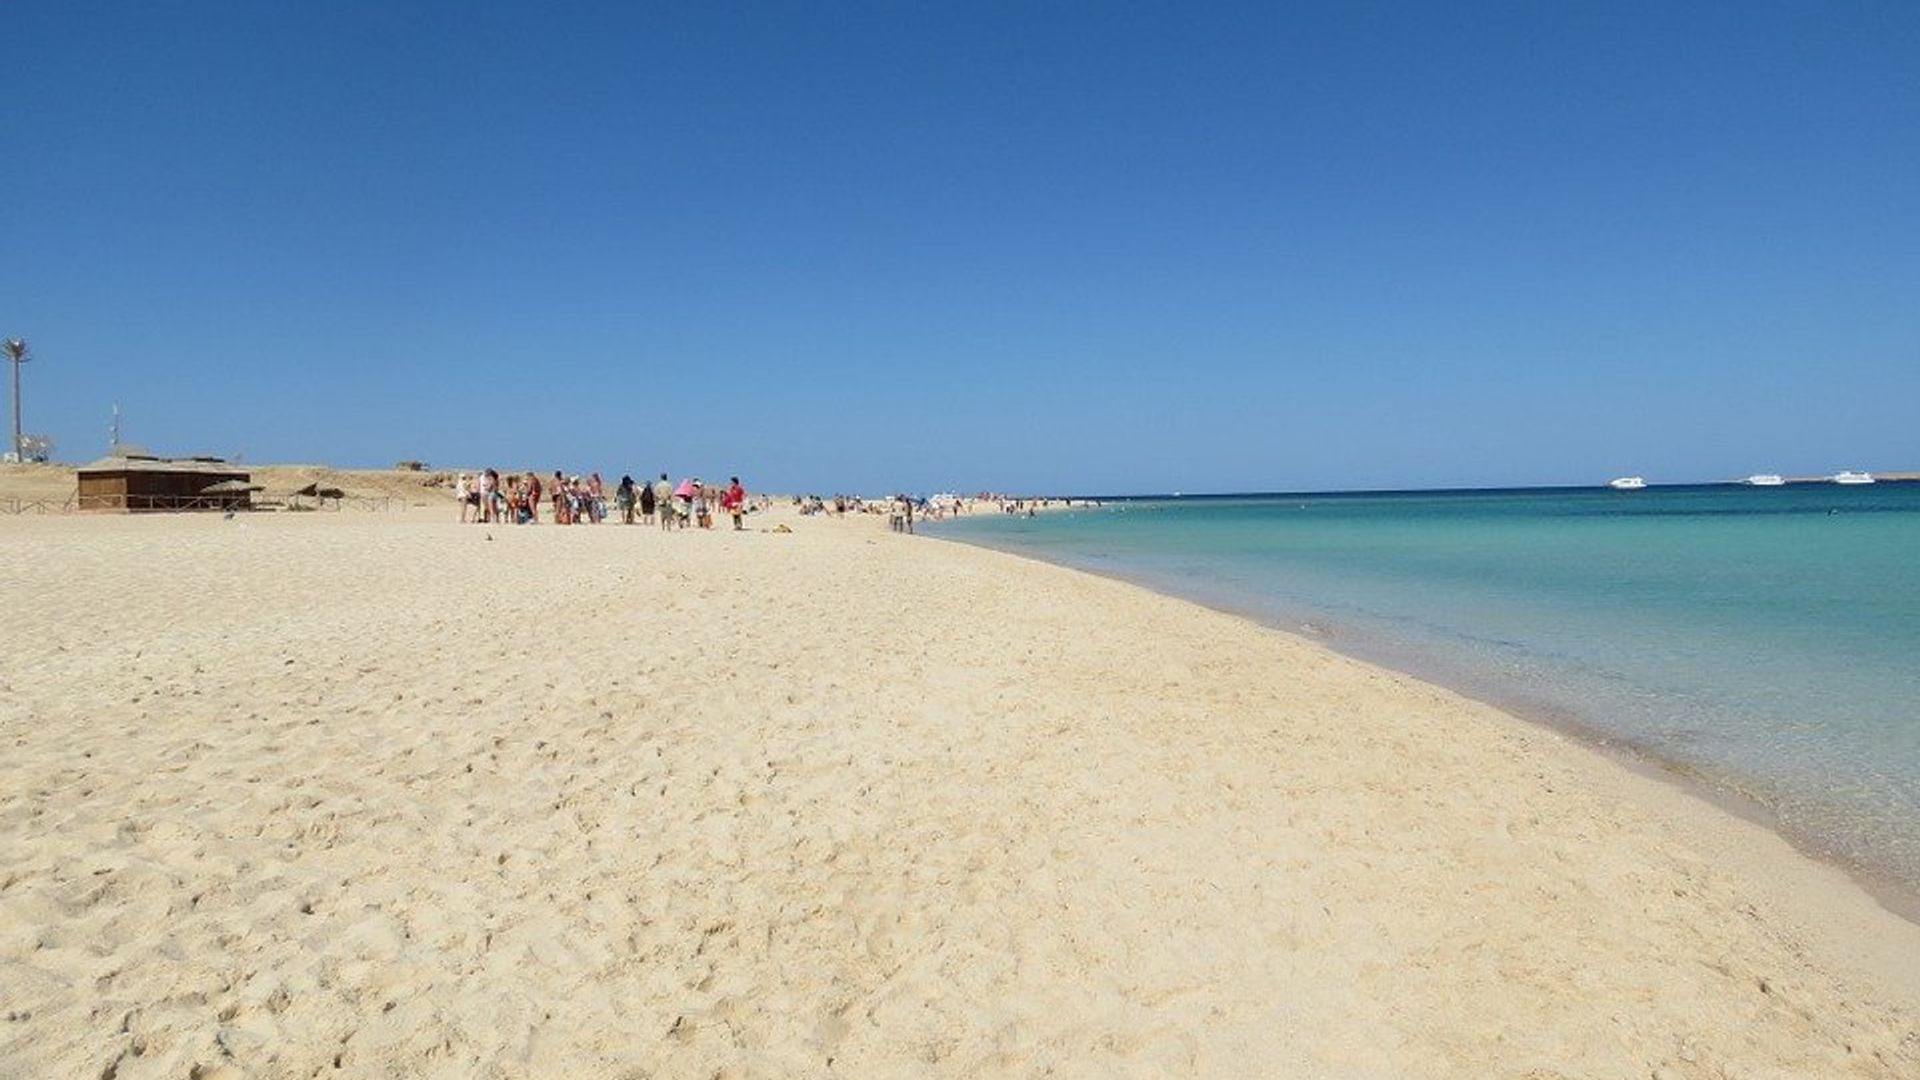 Revelion 2022 - Sejur plaja Hurghada, Egipt, 8 zile - zbor charter